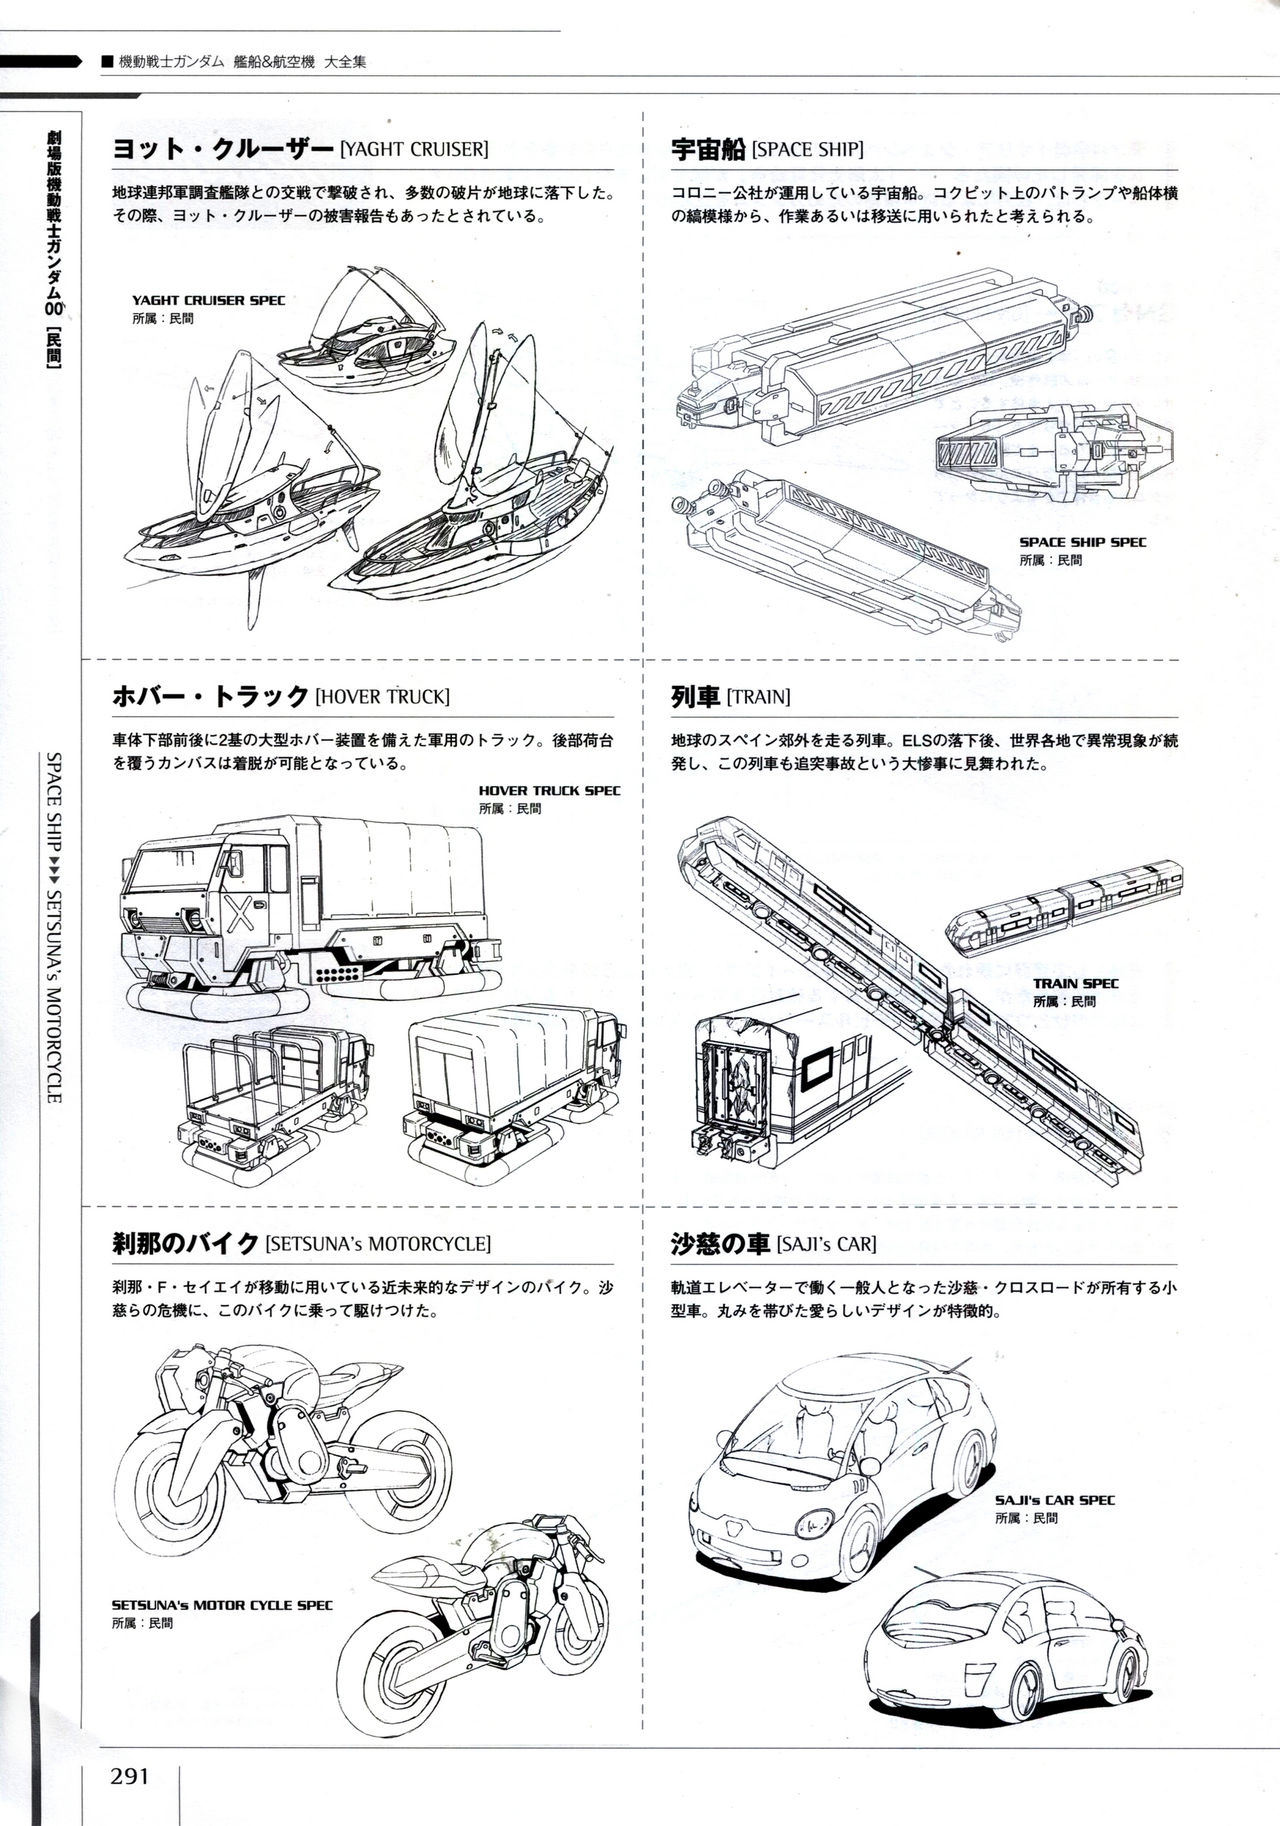 Mobile Suit Gundam - Ship & Aerospace Plane Encyclopedia - Revised Edition 296